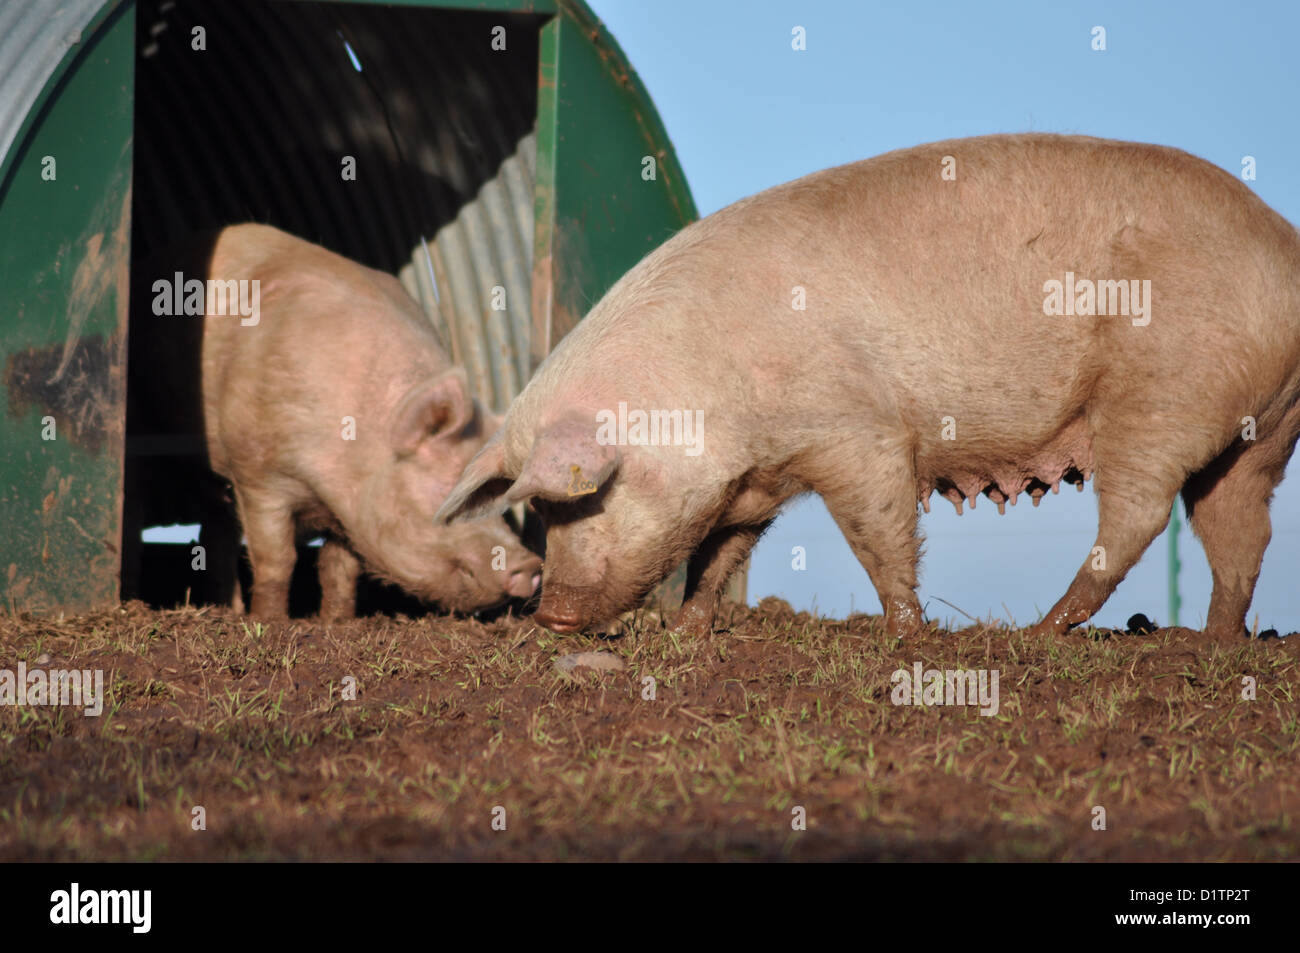 Breeding Pair of Farmyard Pigs Stock Photo